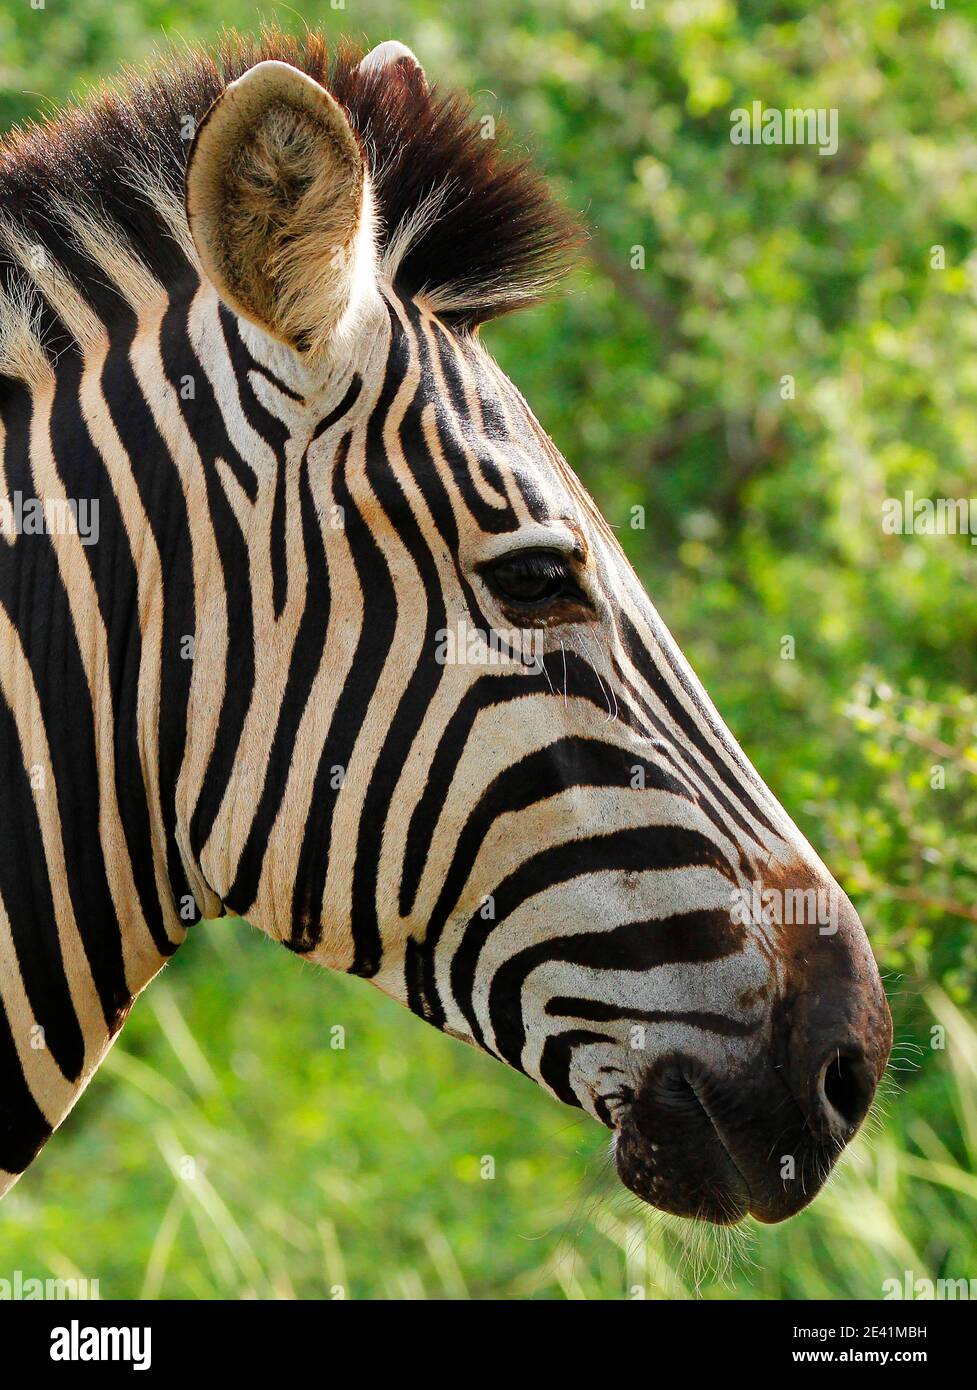 A close-up headshot of a zebra; Stock Photo